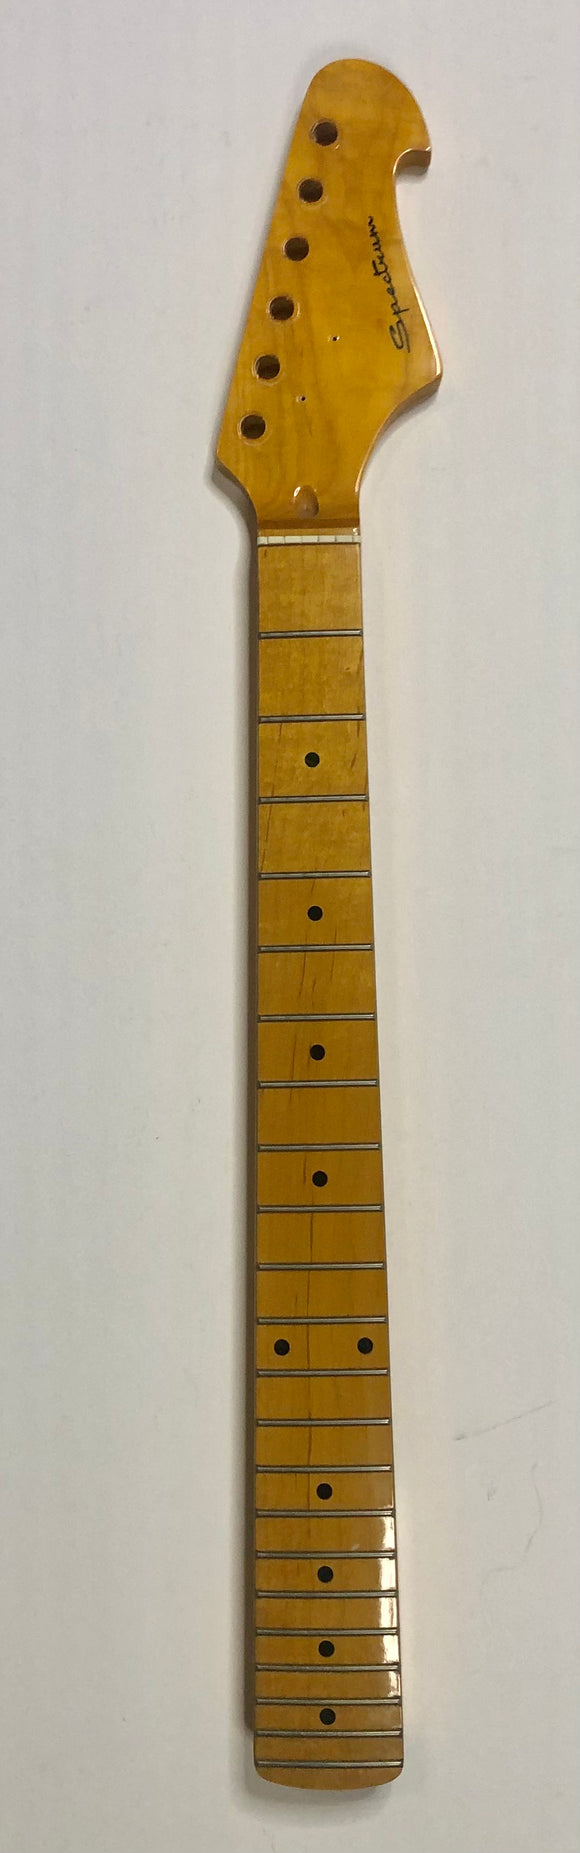 Spectrum Maple Guitar Neck and Fretboard